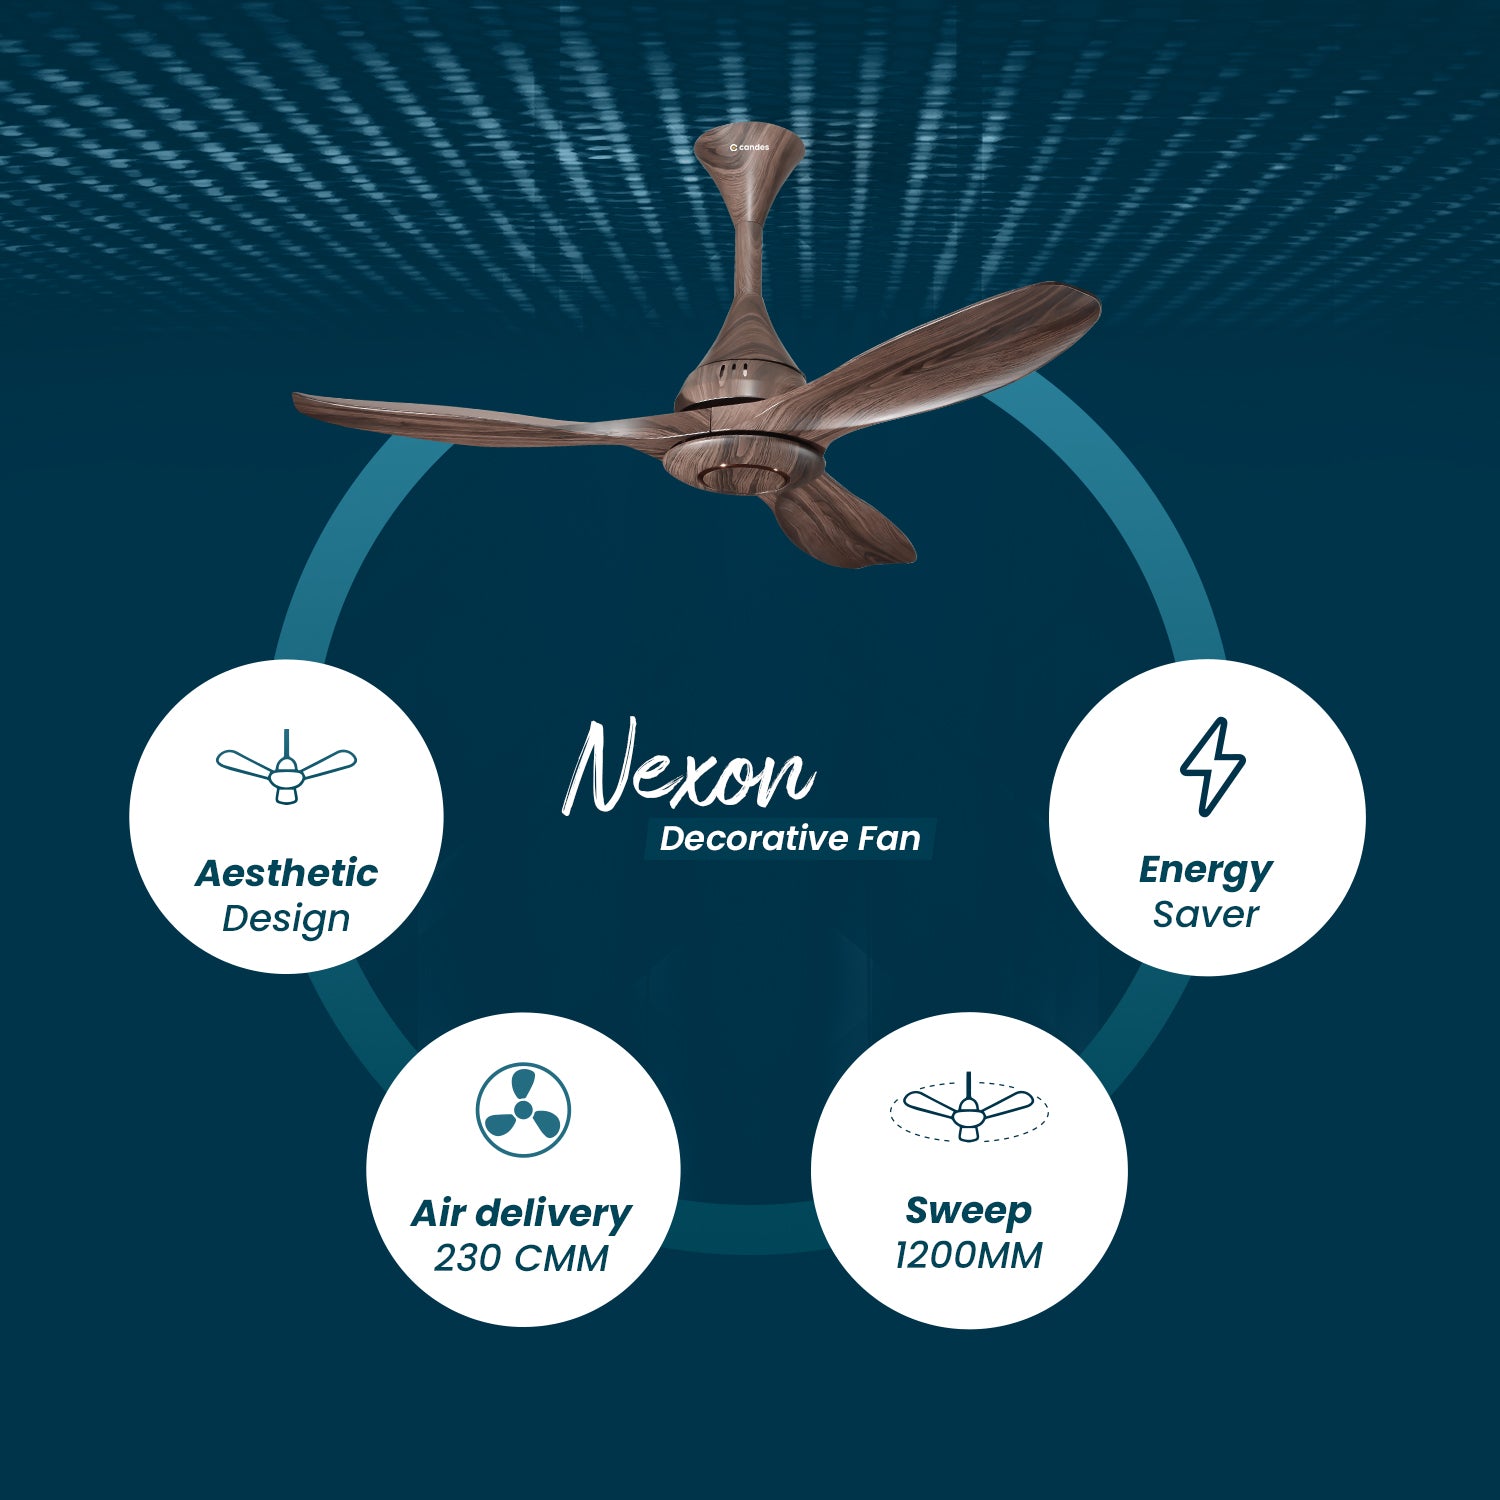 Nexon High Speed 1200 mm Designer Ceiling Fan Wooden